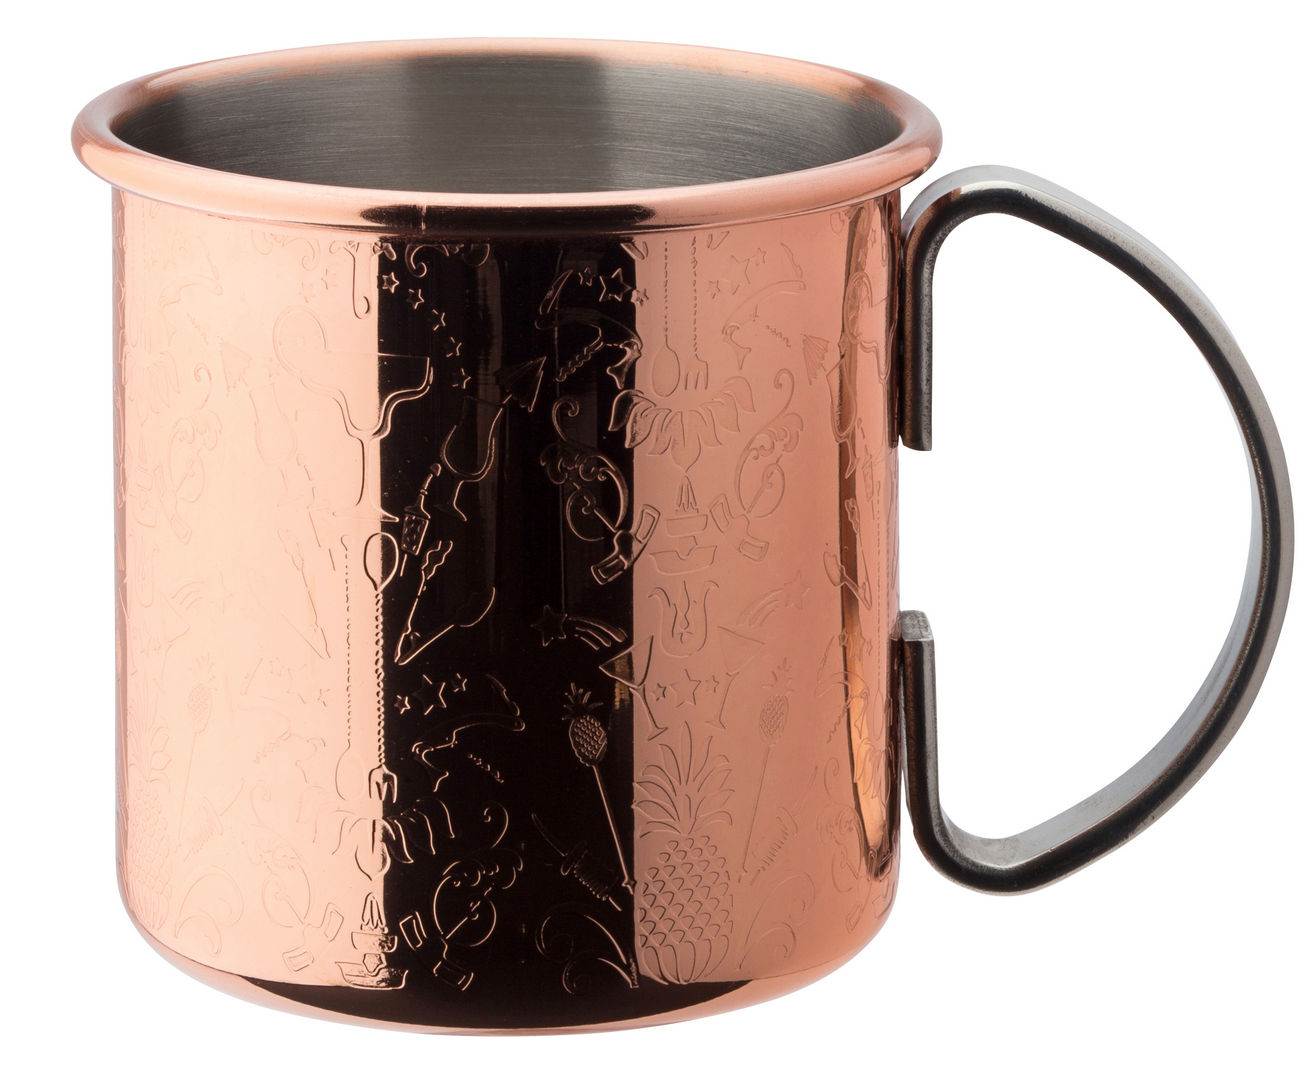 Chased Copper Mug 17oz (48cl) - F91120-000000-B01006 (Pack of 6)